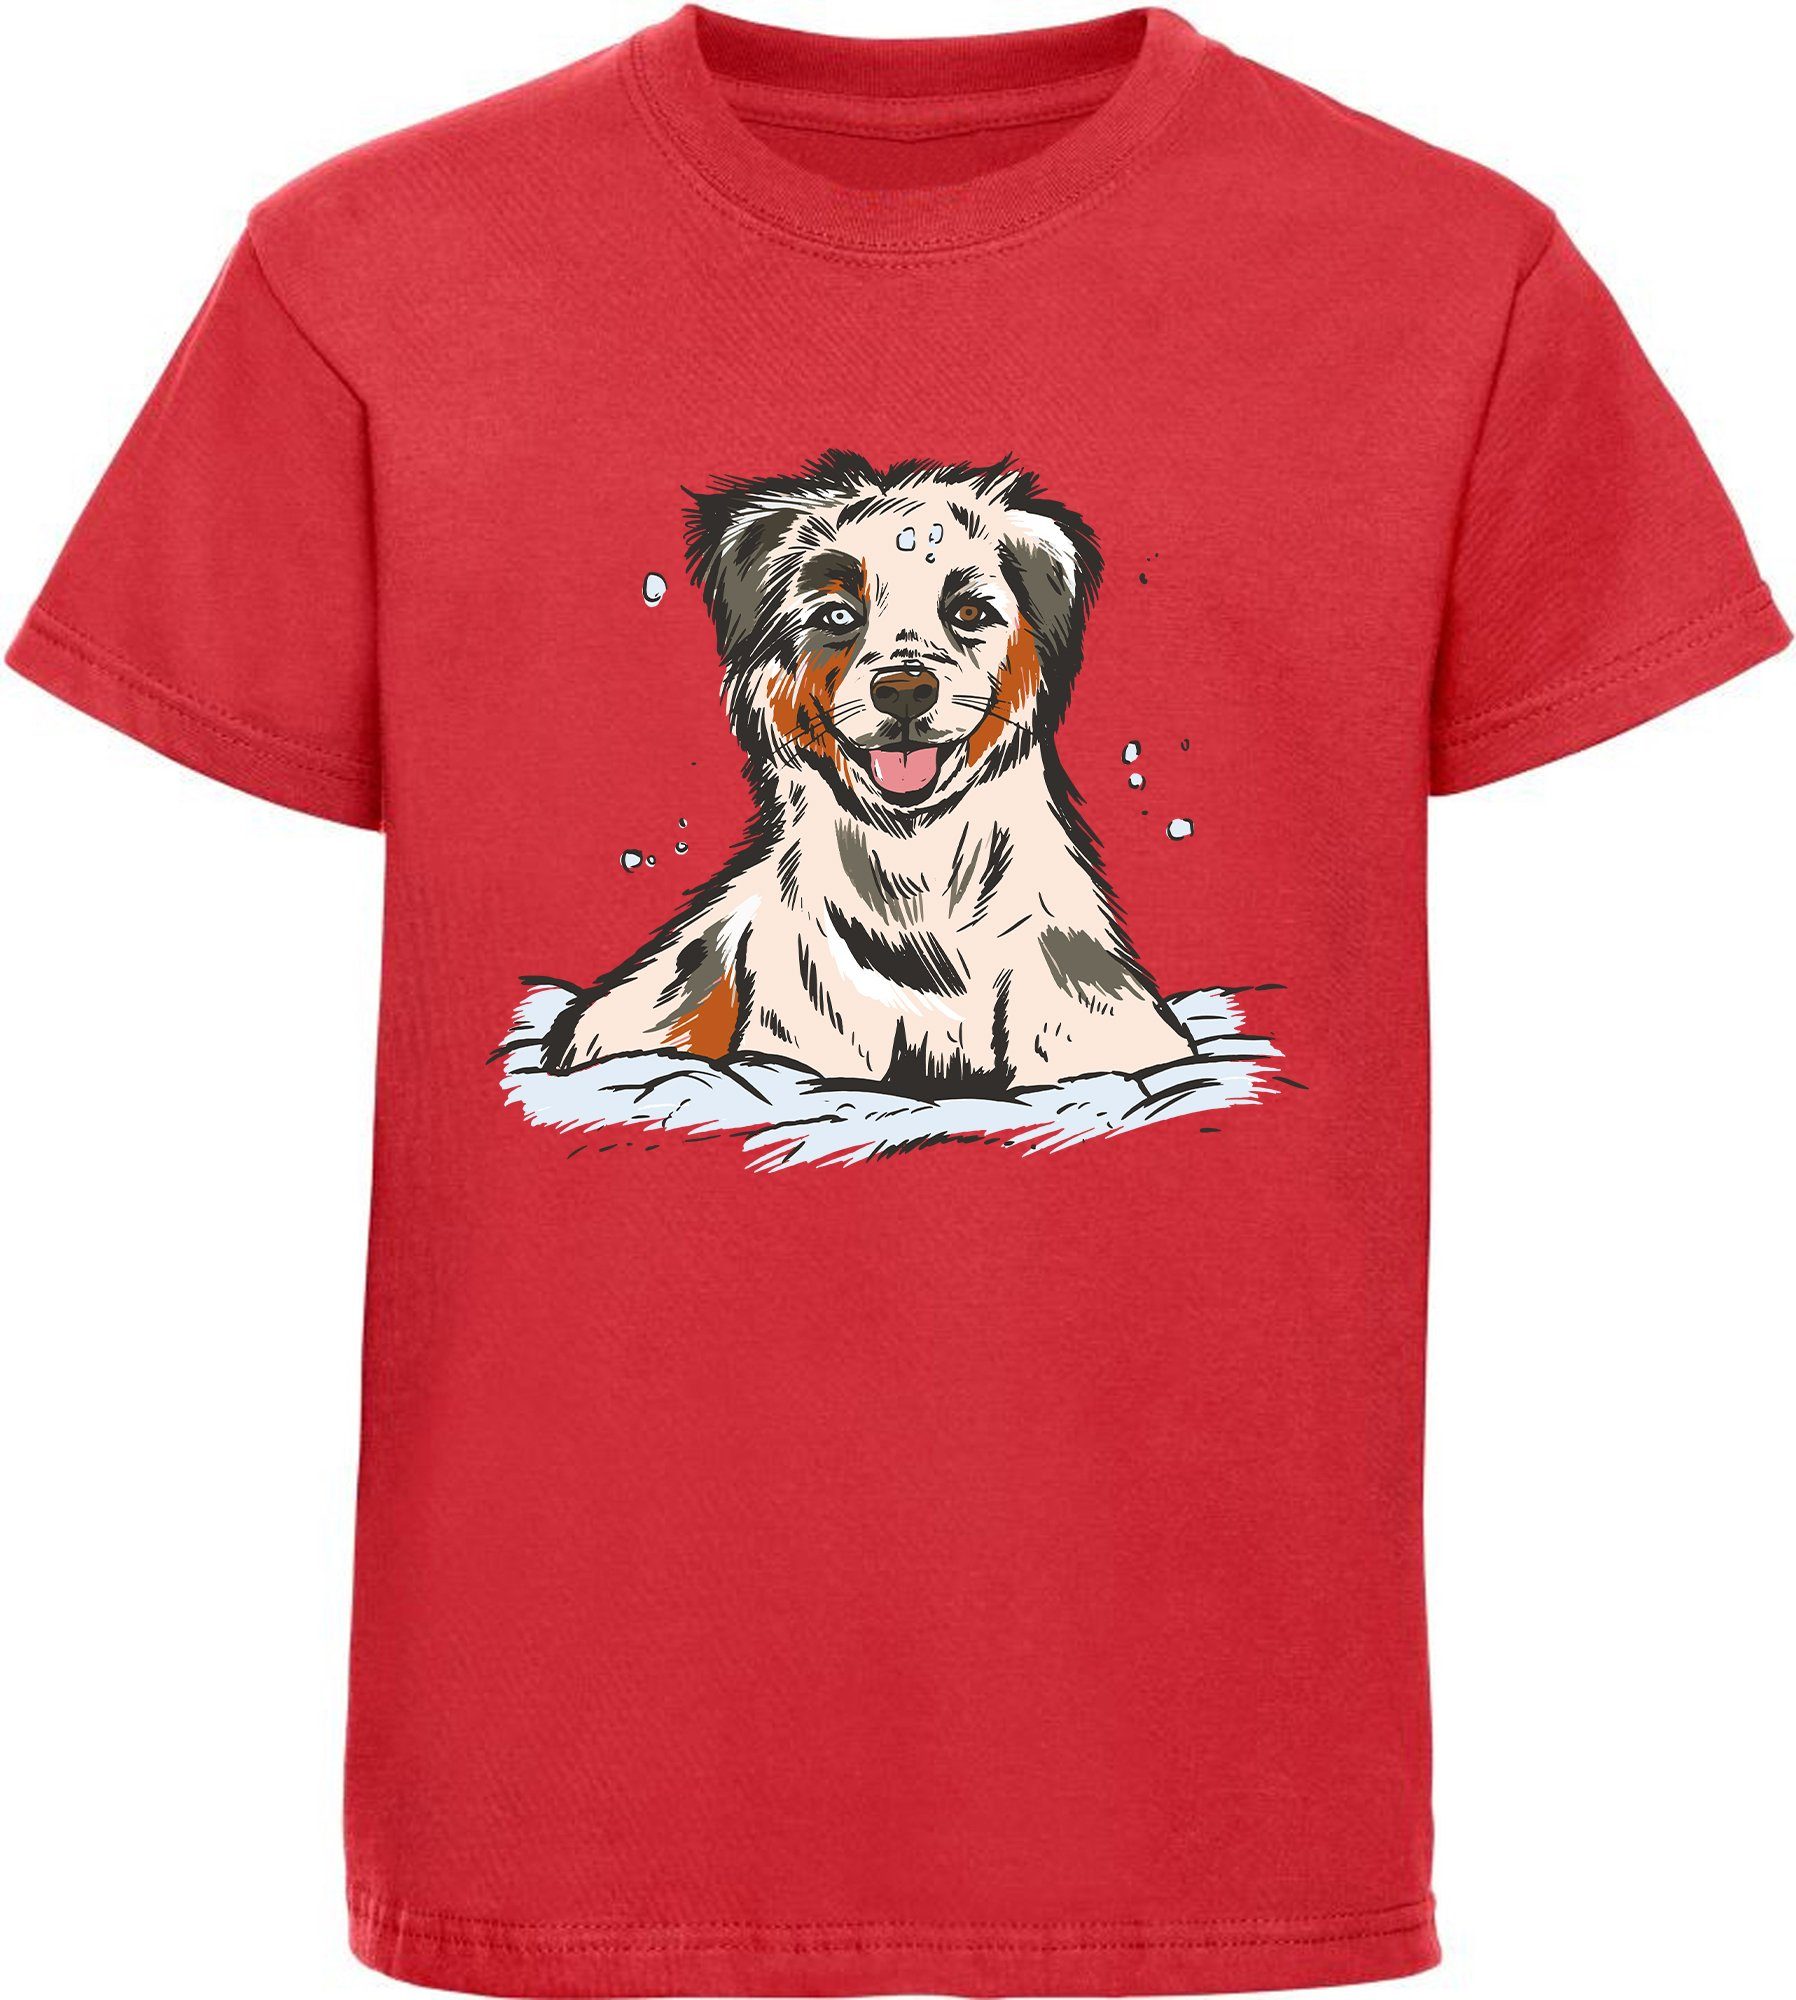 Hunde Baumwollshirt Jugend Shepherd T-Shirt i216 Kinder und rot Aufdruck, bedrucktes Australian mit Welpe Print-Shirt MyDesign24